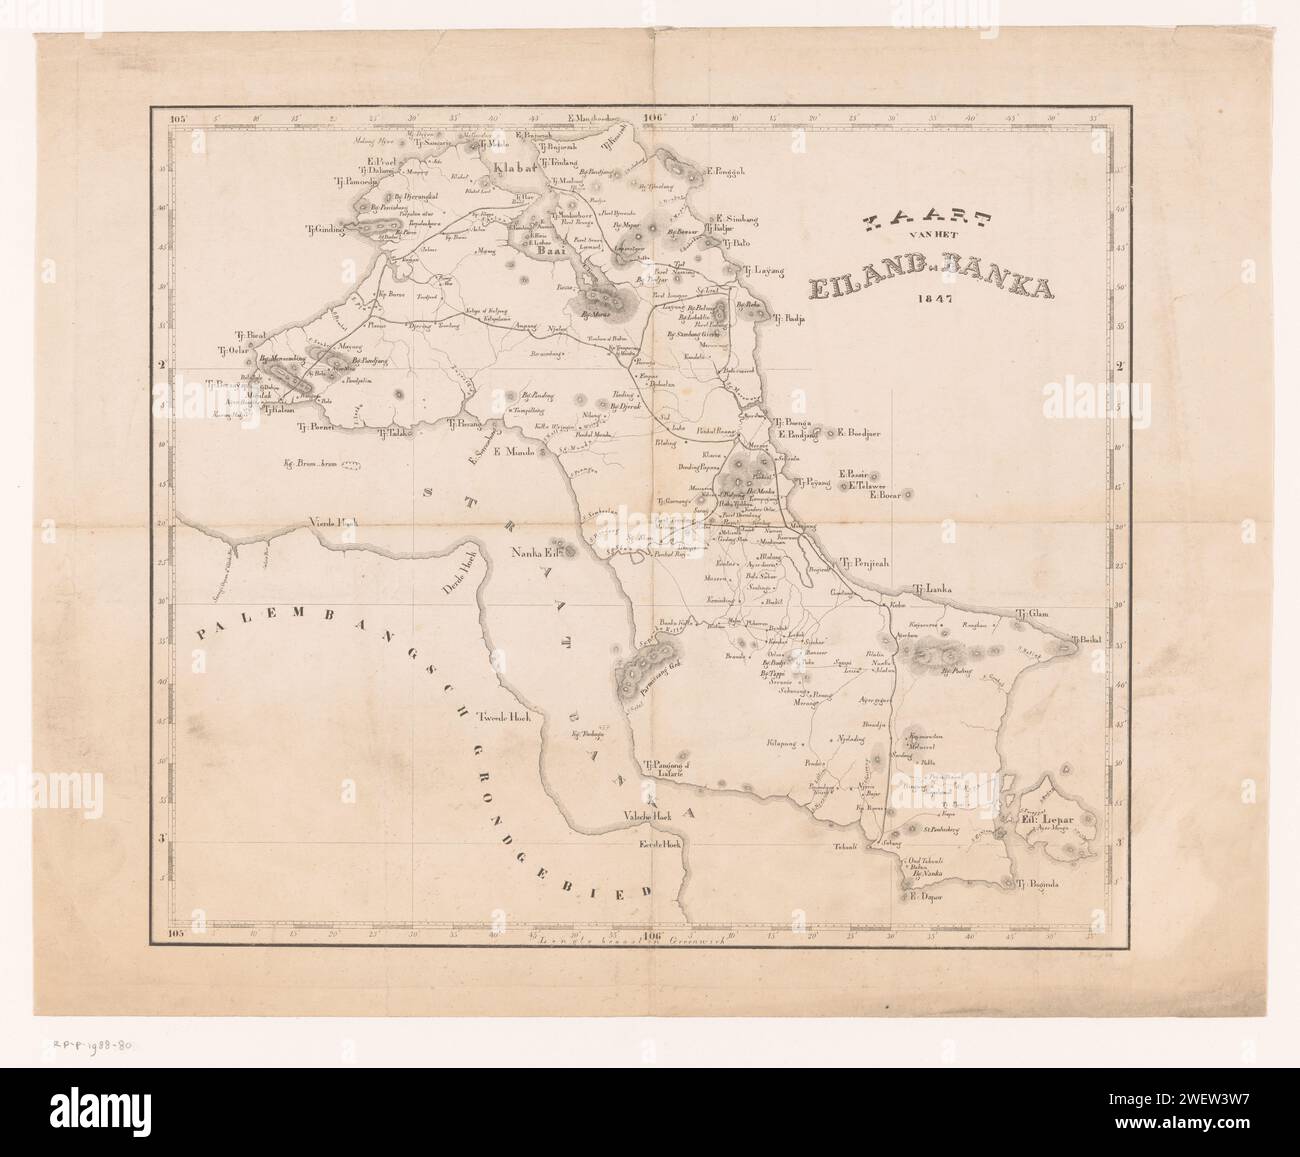 Mappa dell'isola di Bangka, 1847, Koenig, 1800 - 1880 Stampa mappa dell'isola di Bangka. Una distribuzione di grado. Cartine cartacee, atlanti Bangka Foto Stock